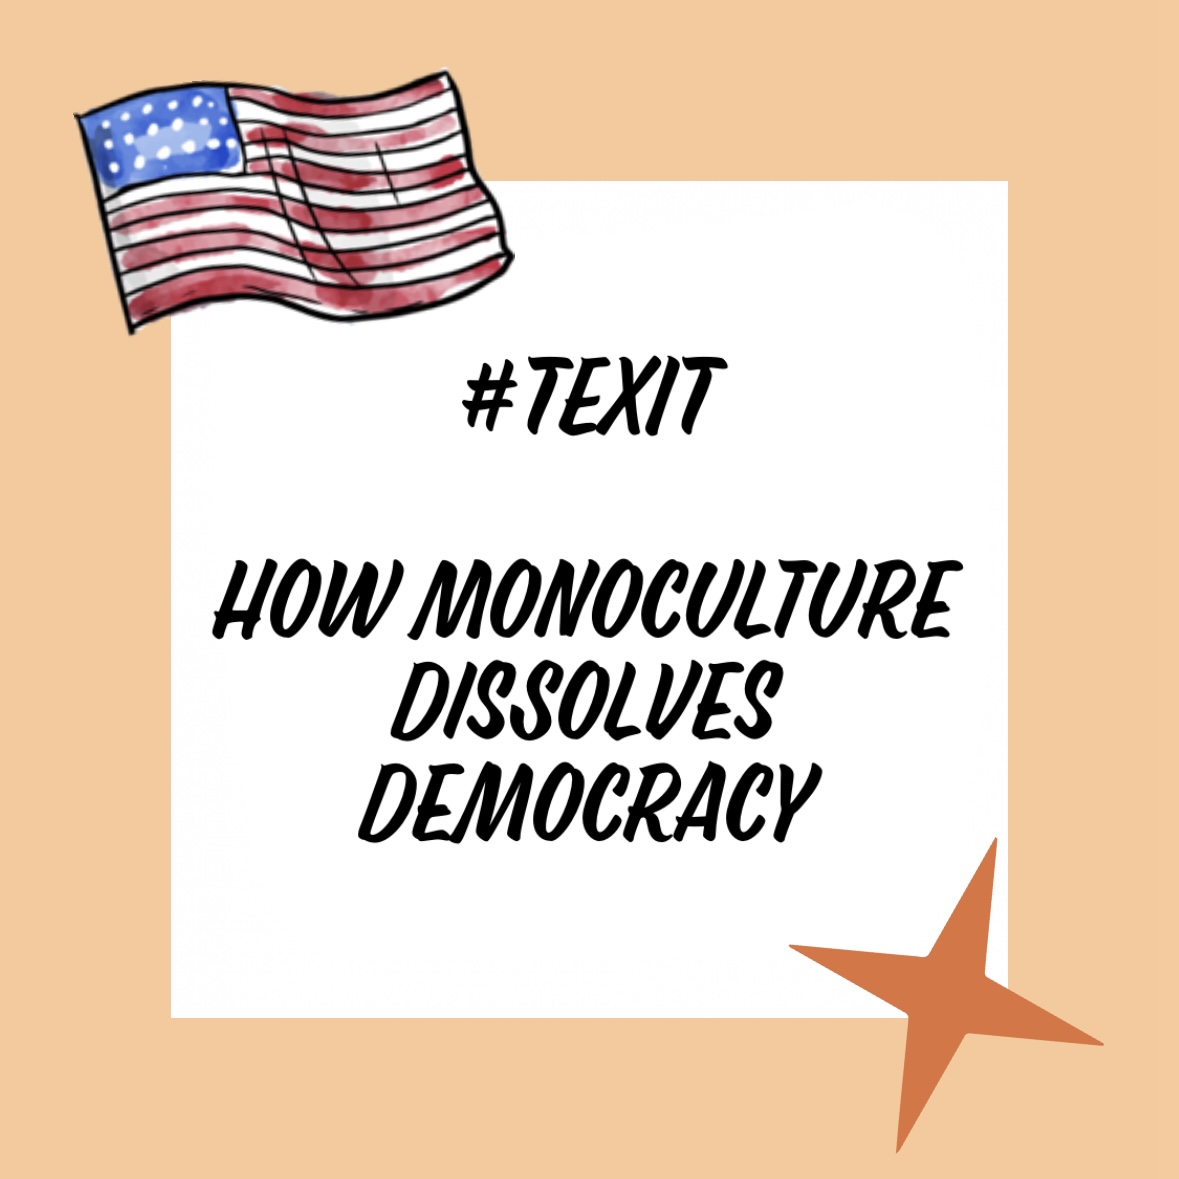 #TEXIT, How Monoculture Dissolves Democracy